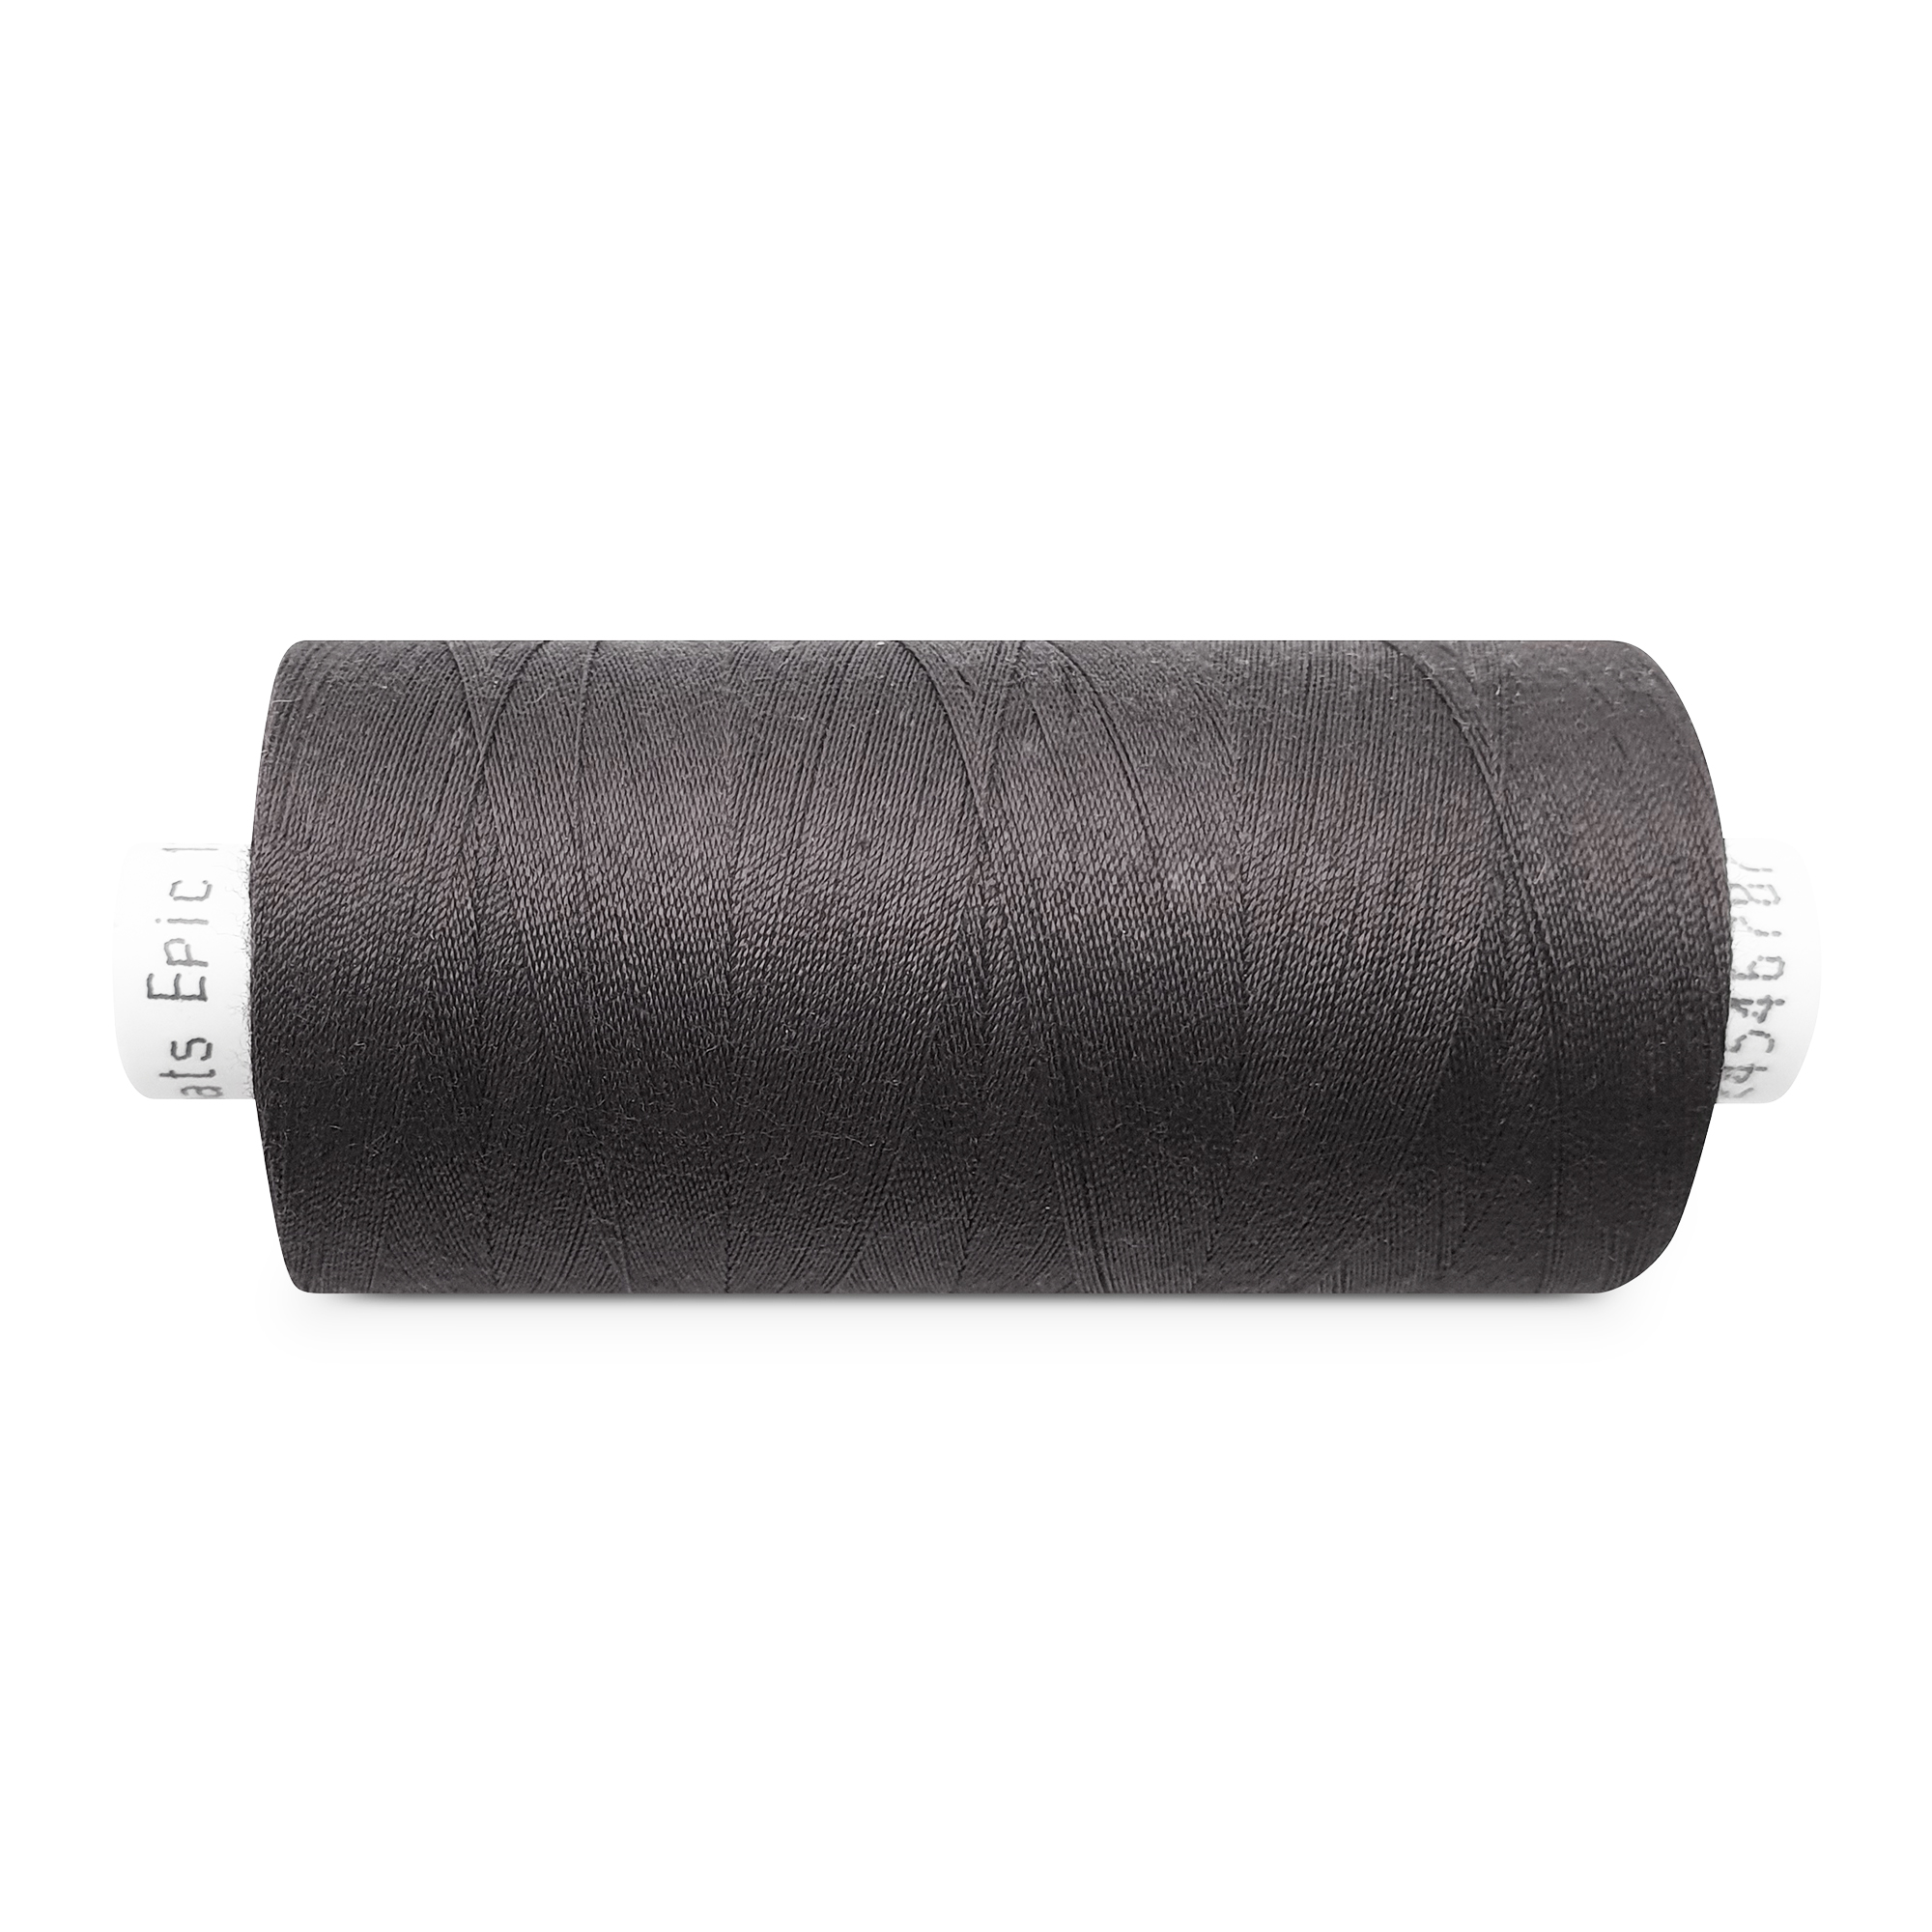 Leather/Sewing thread dark brown grey